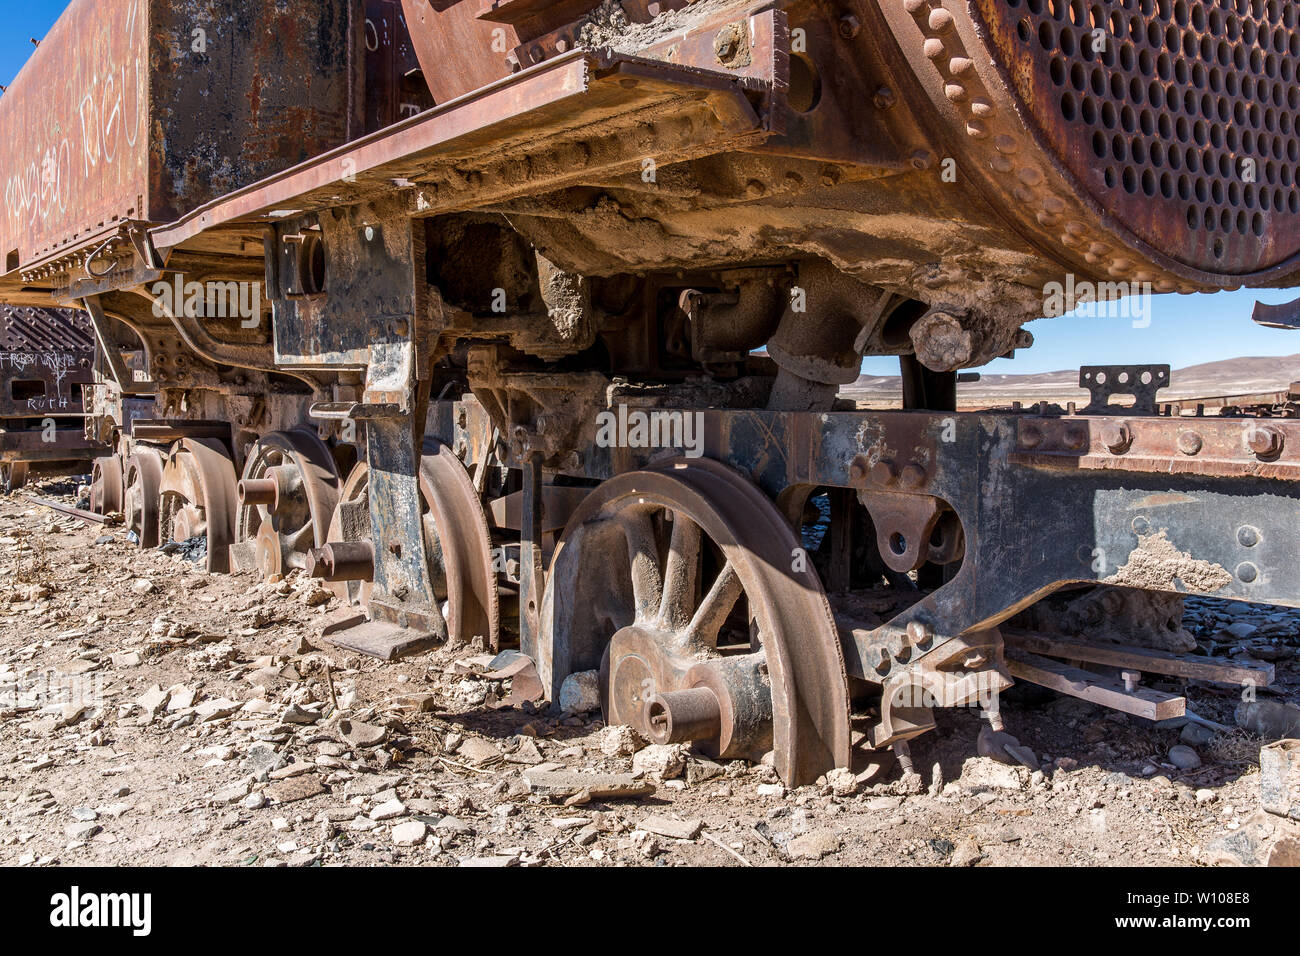 Train cemetary in Uyuni, Bolivia Stock Photo